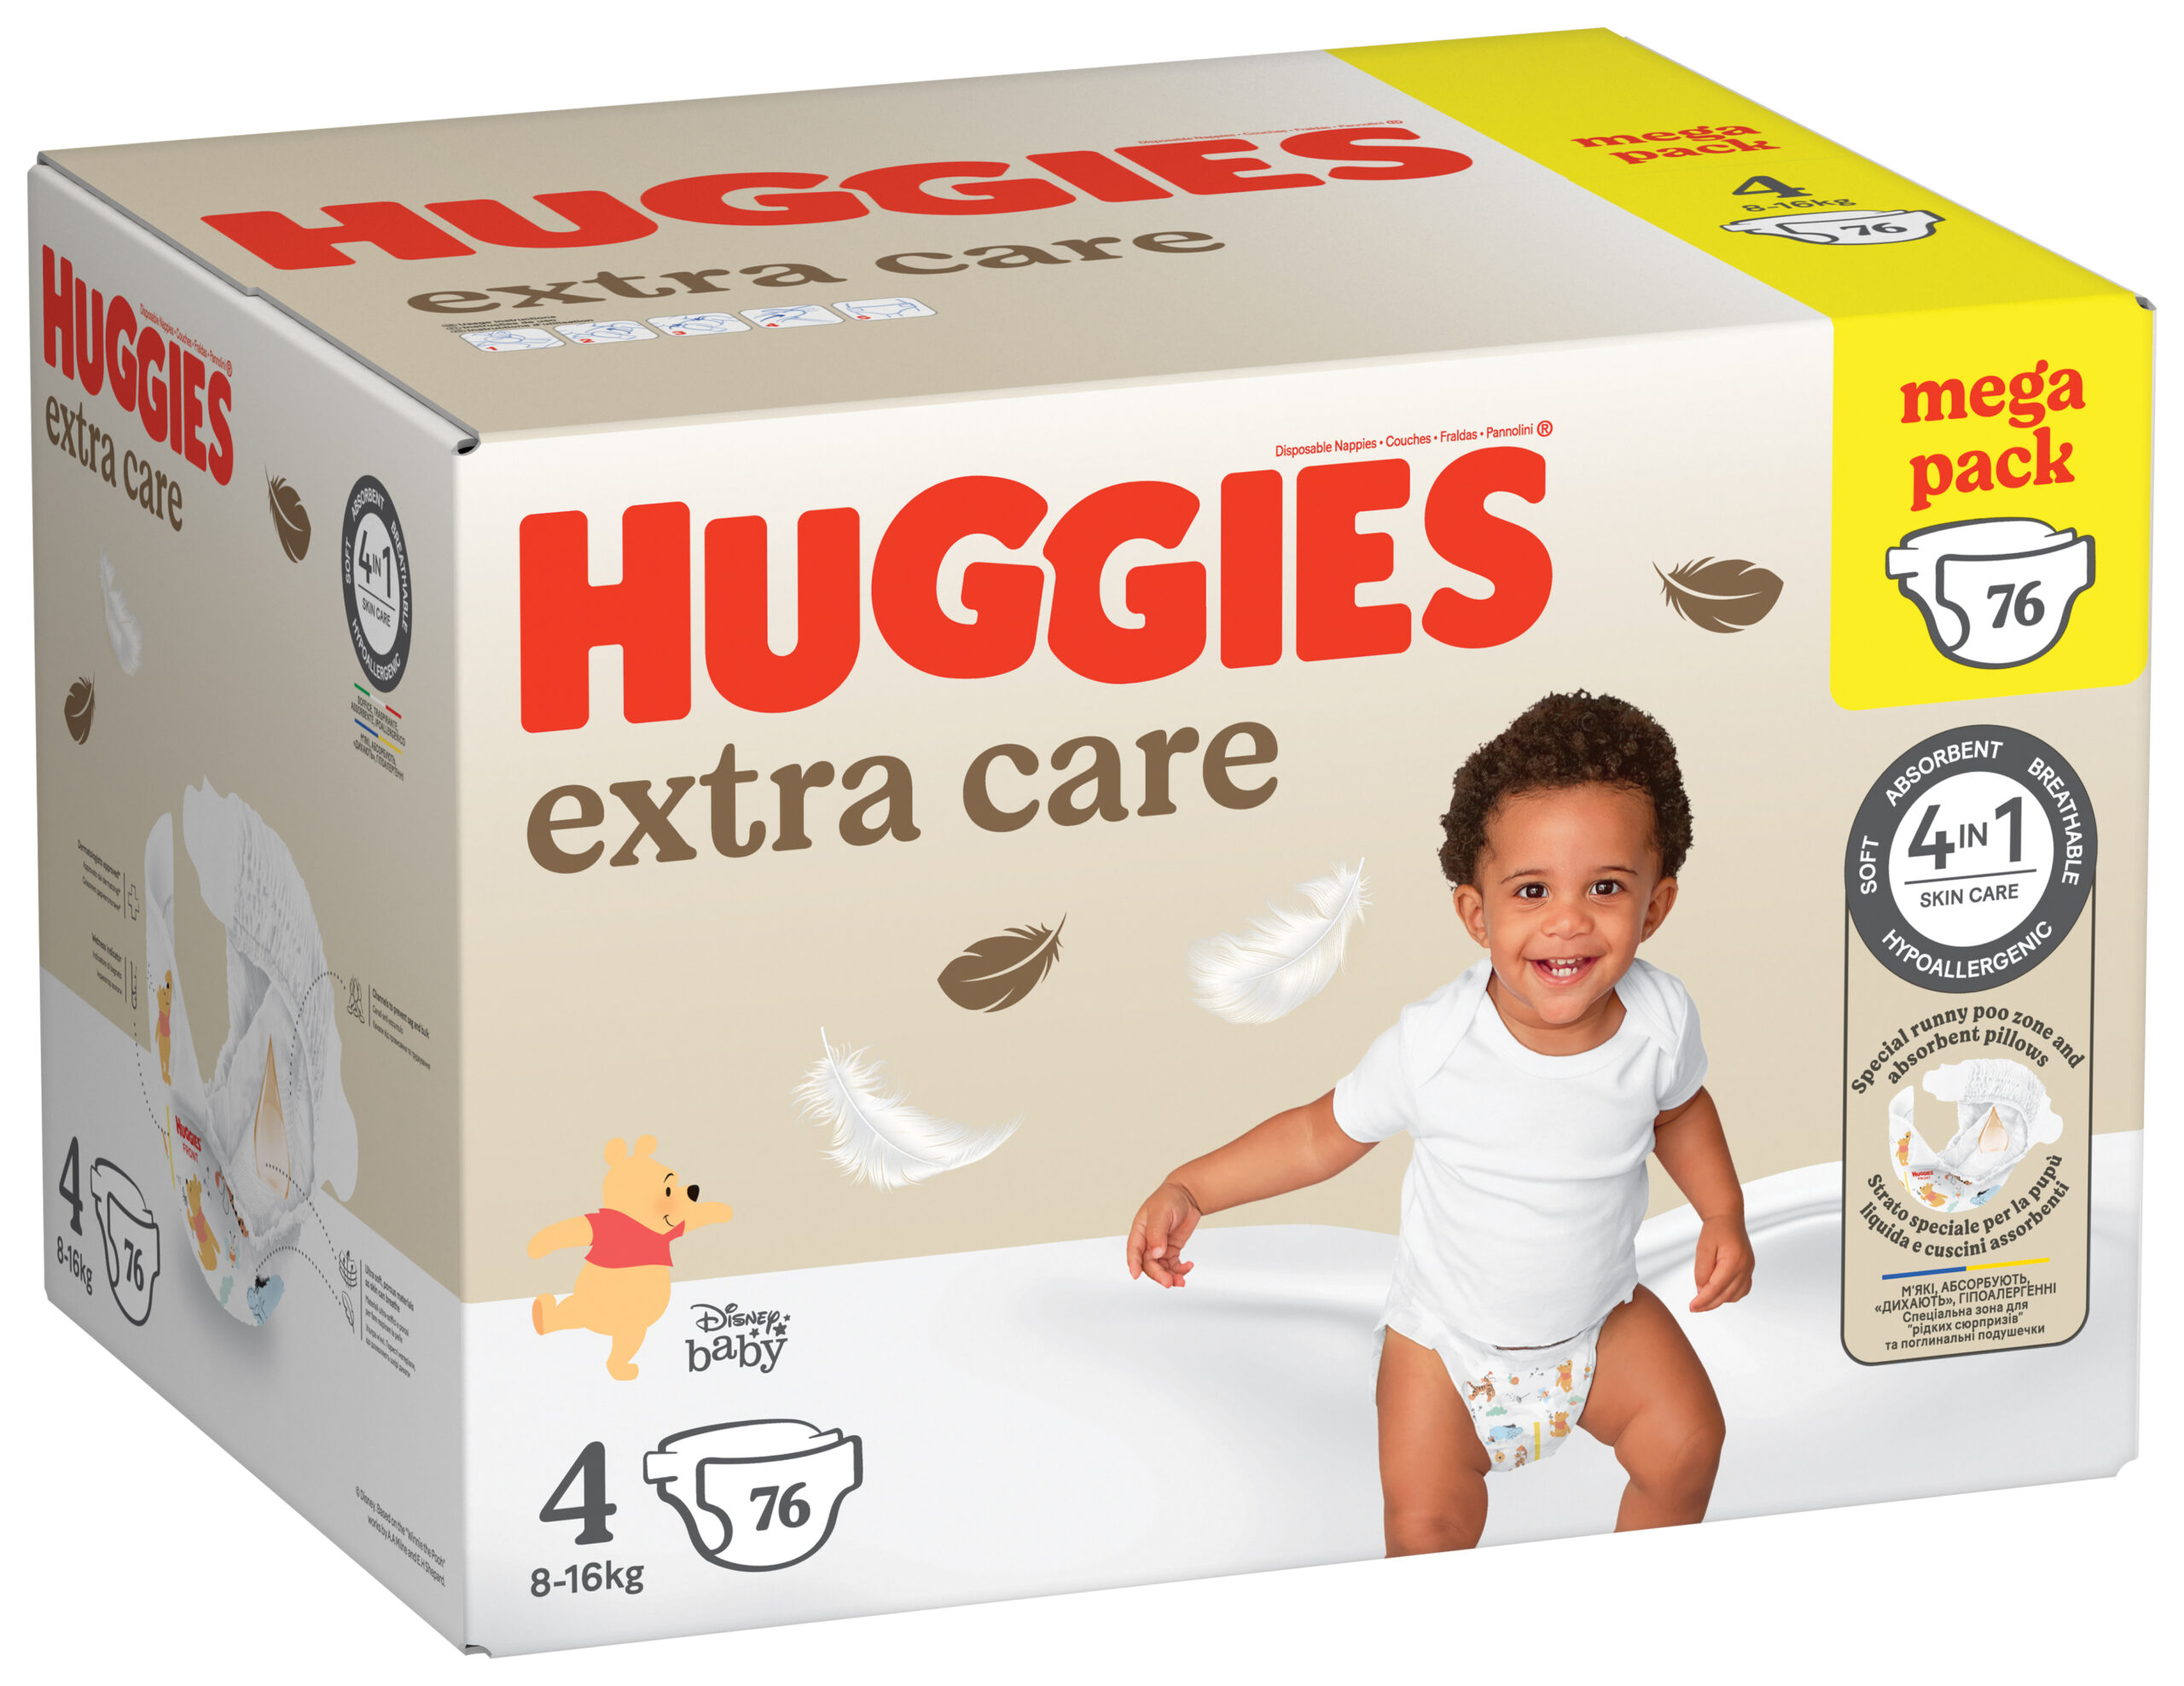 Huggies - extra care mega pack tg.4 - 76 pezzi - Huggies